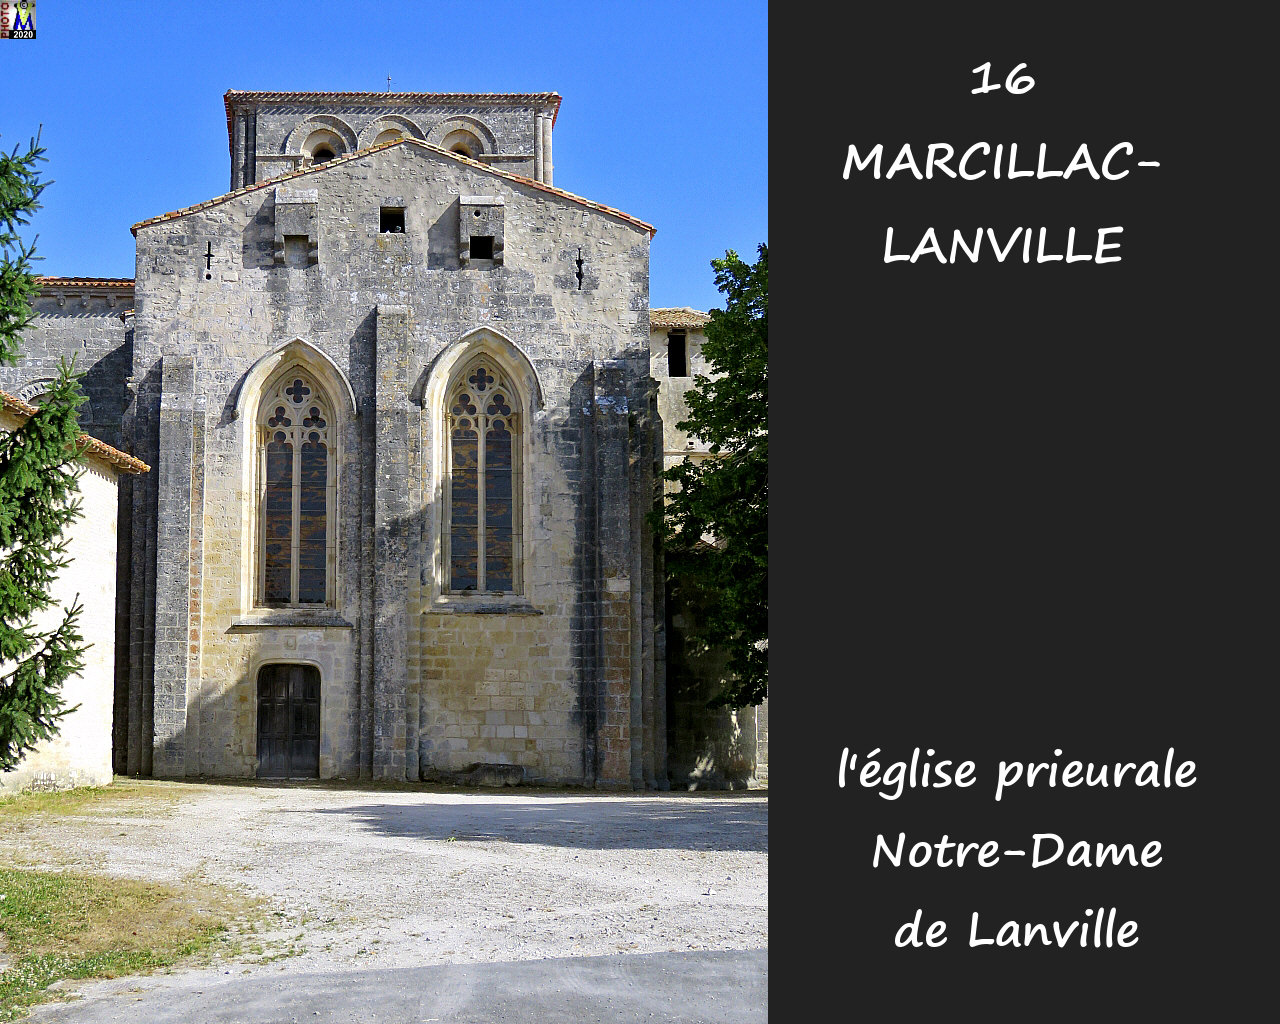 16MARCILLAC-LANVILLE_eglise_1020.jpg